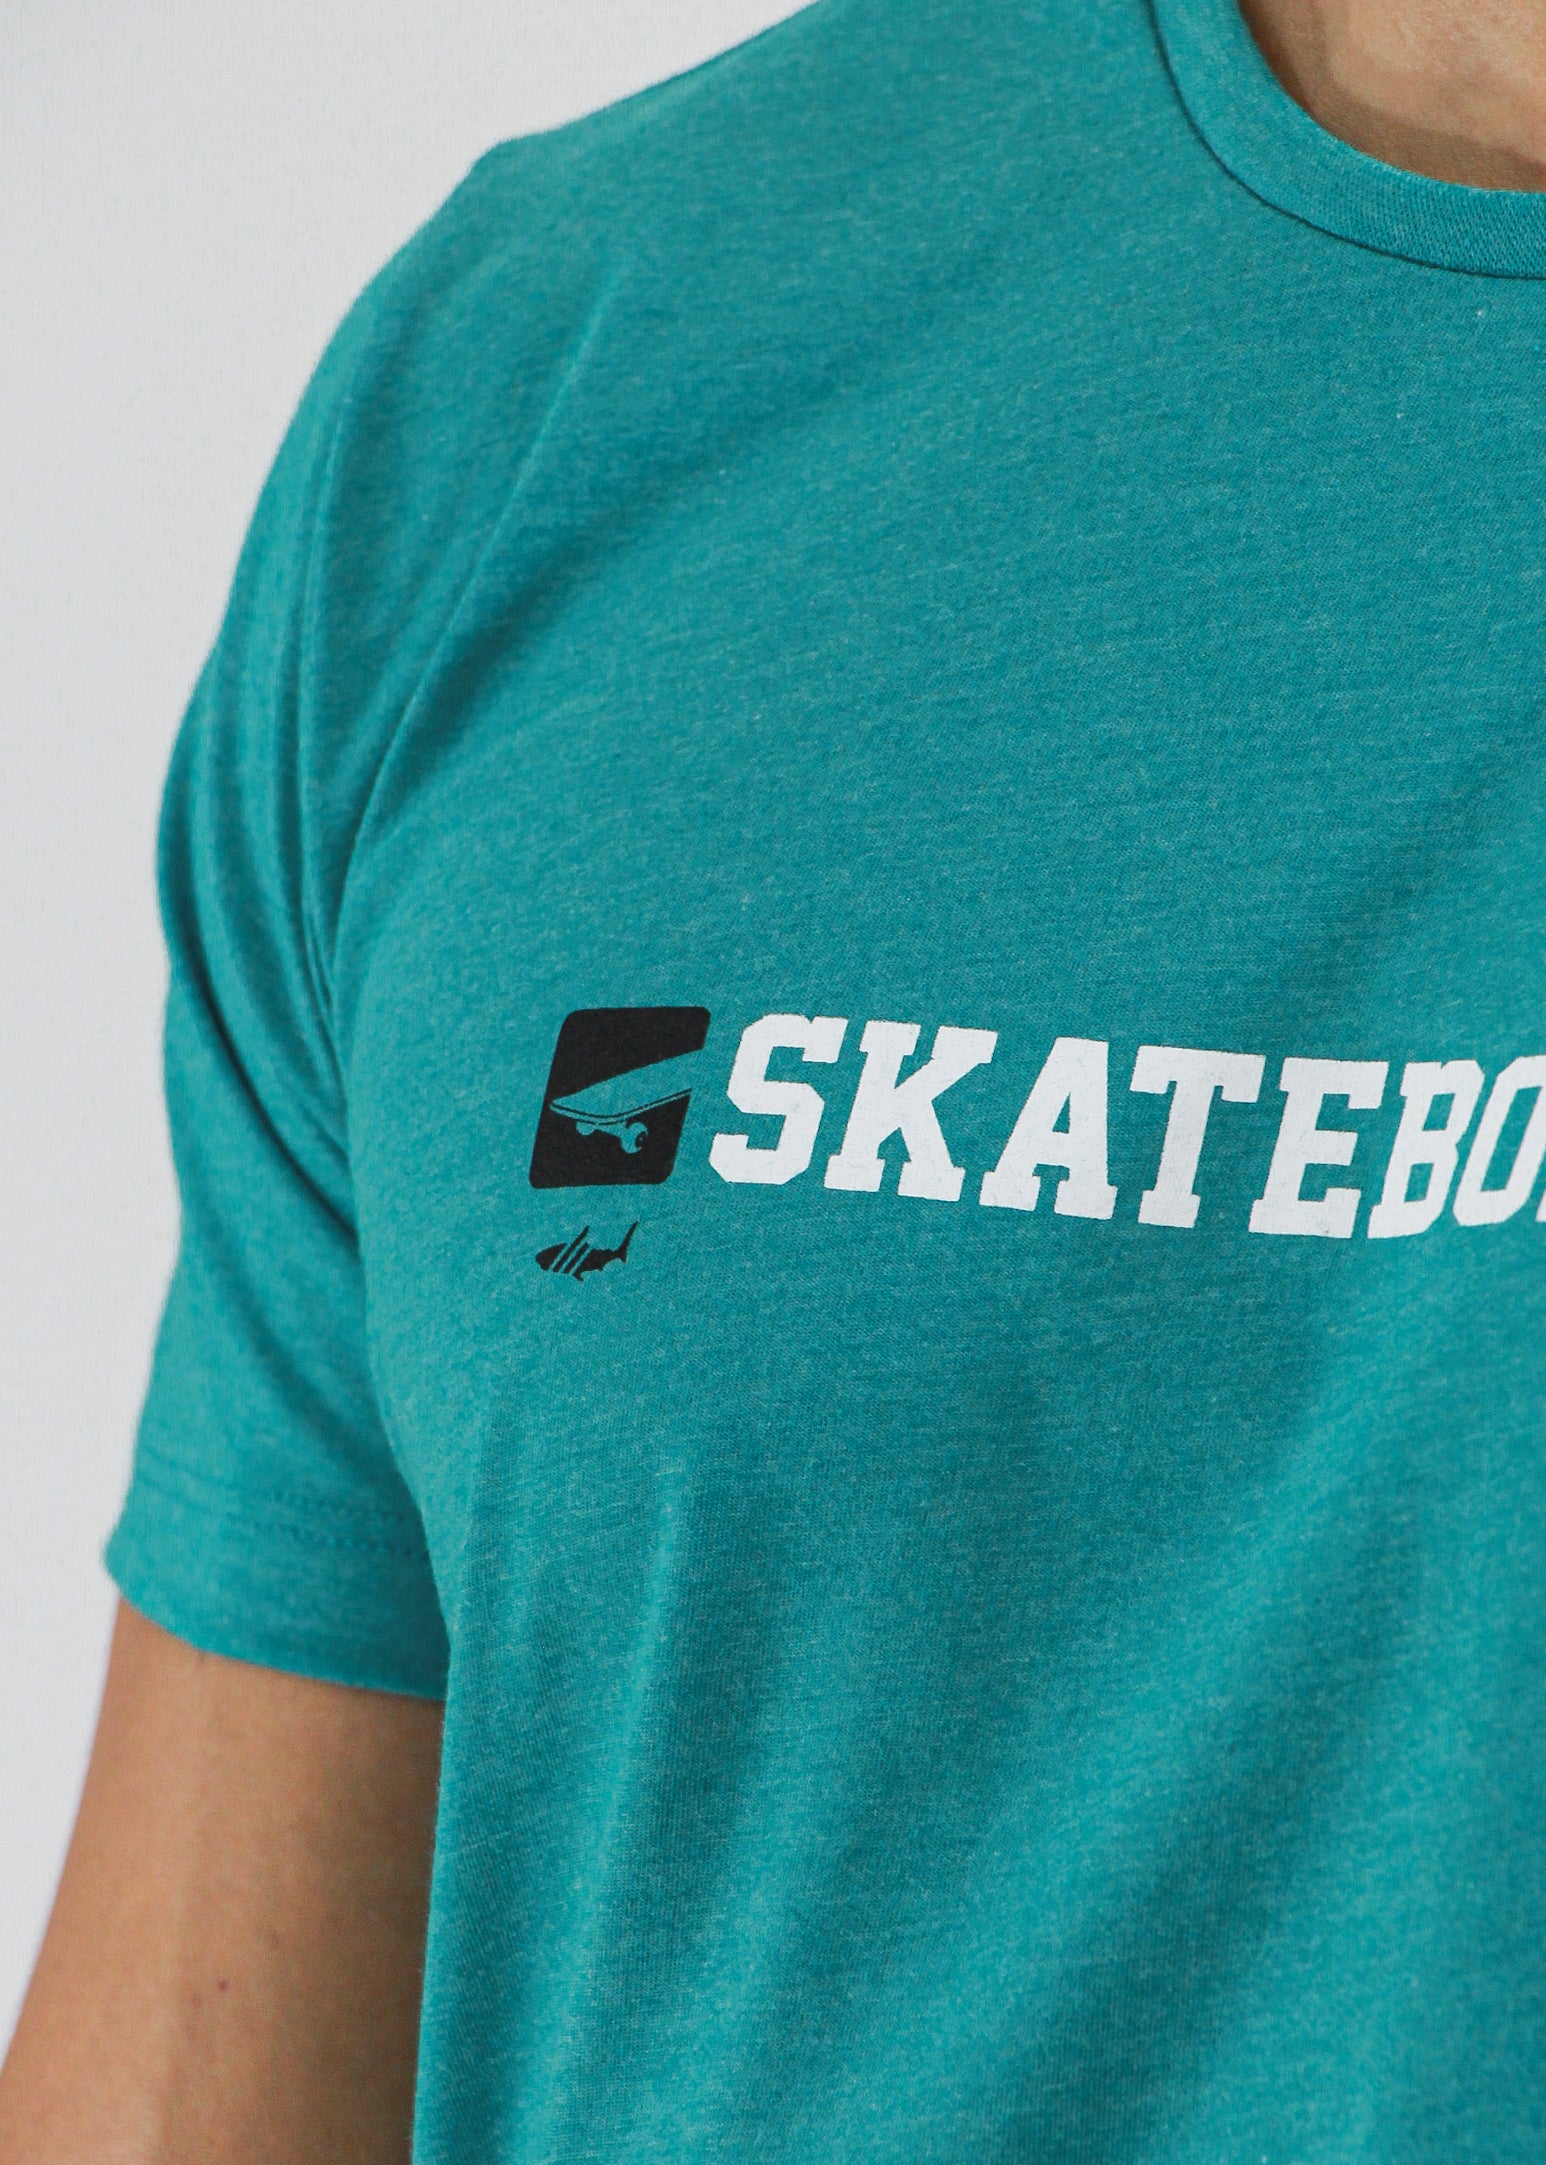 Camiseta Estampada Skatboard - Verde